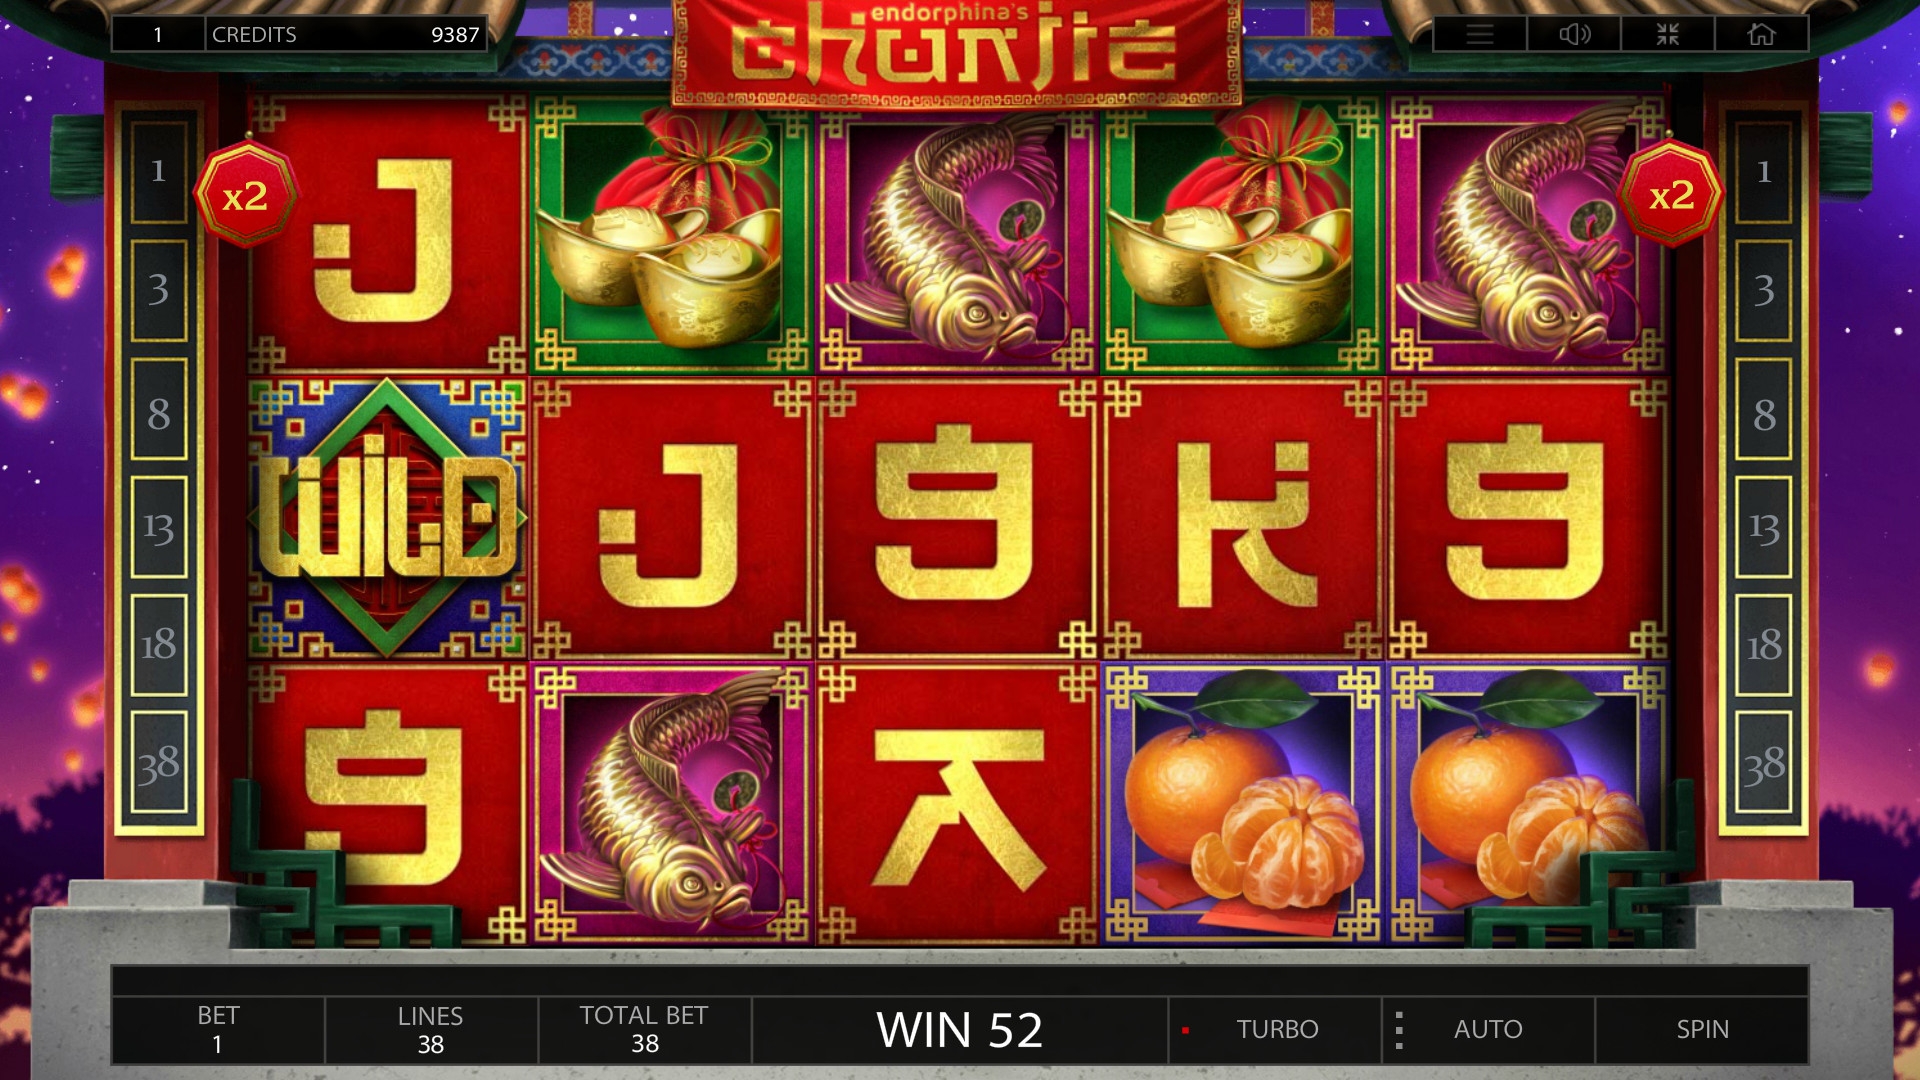 Chunjie (Chunjie) from category Slots